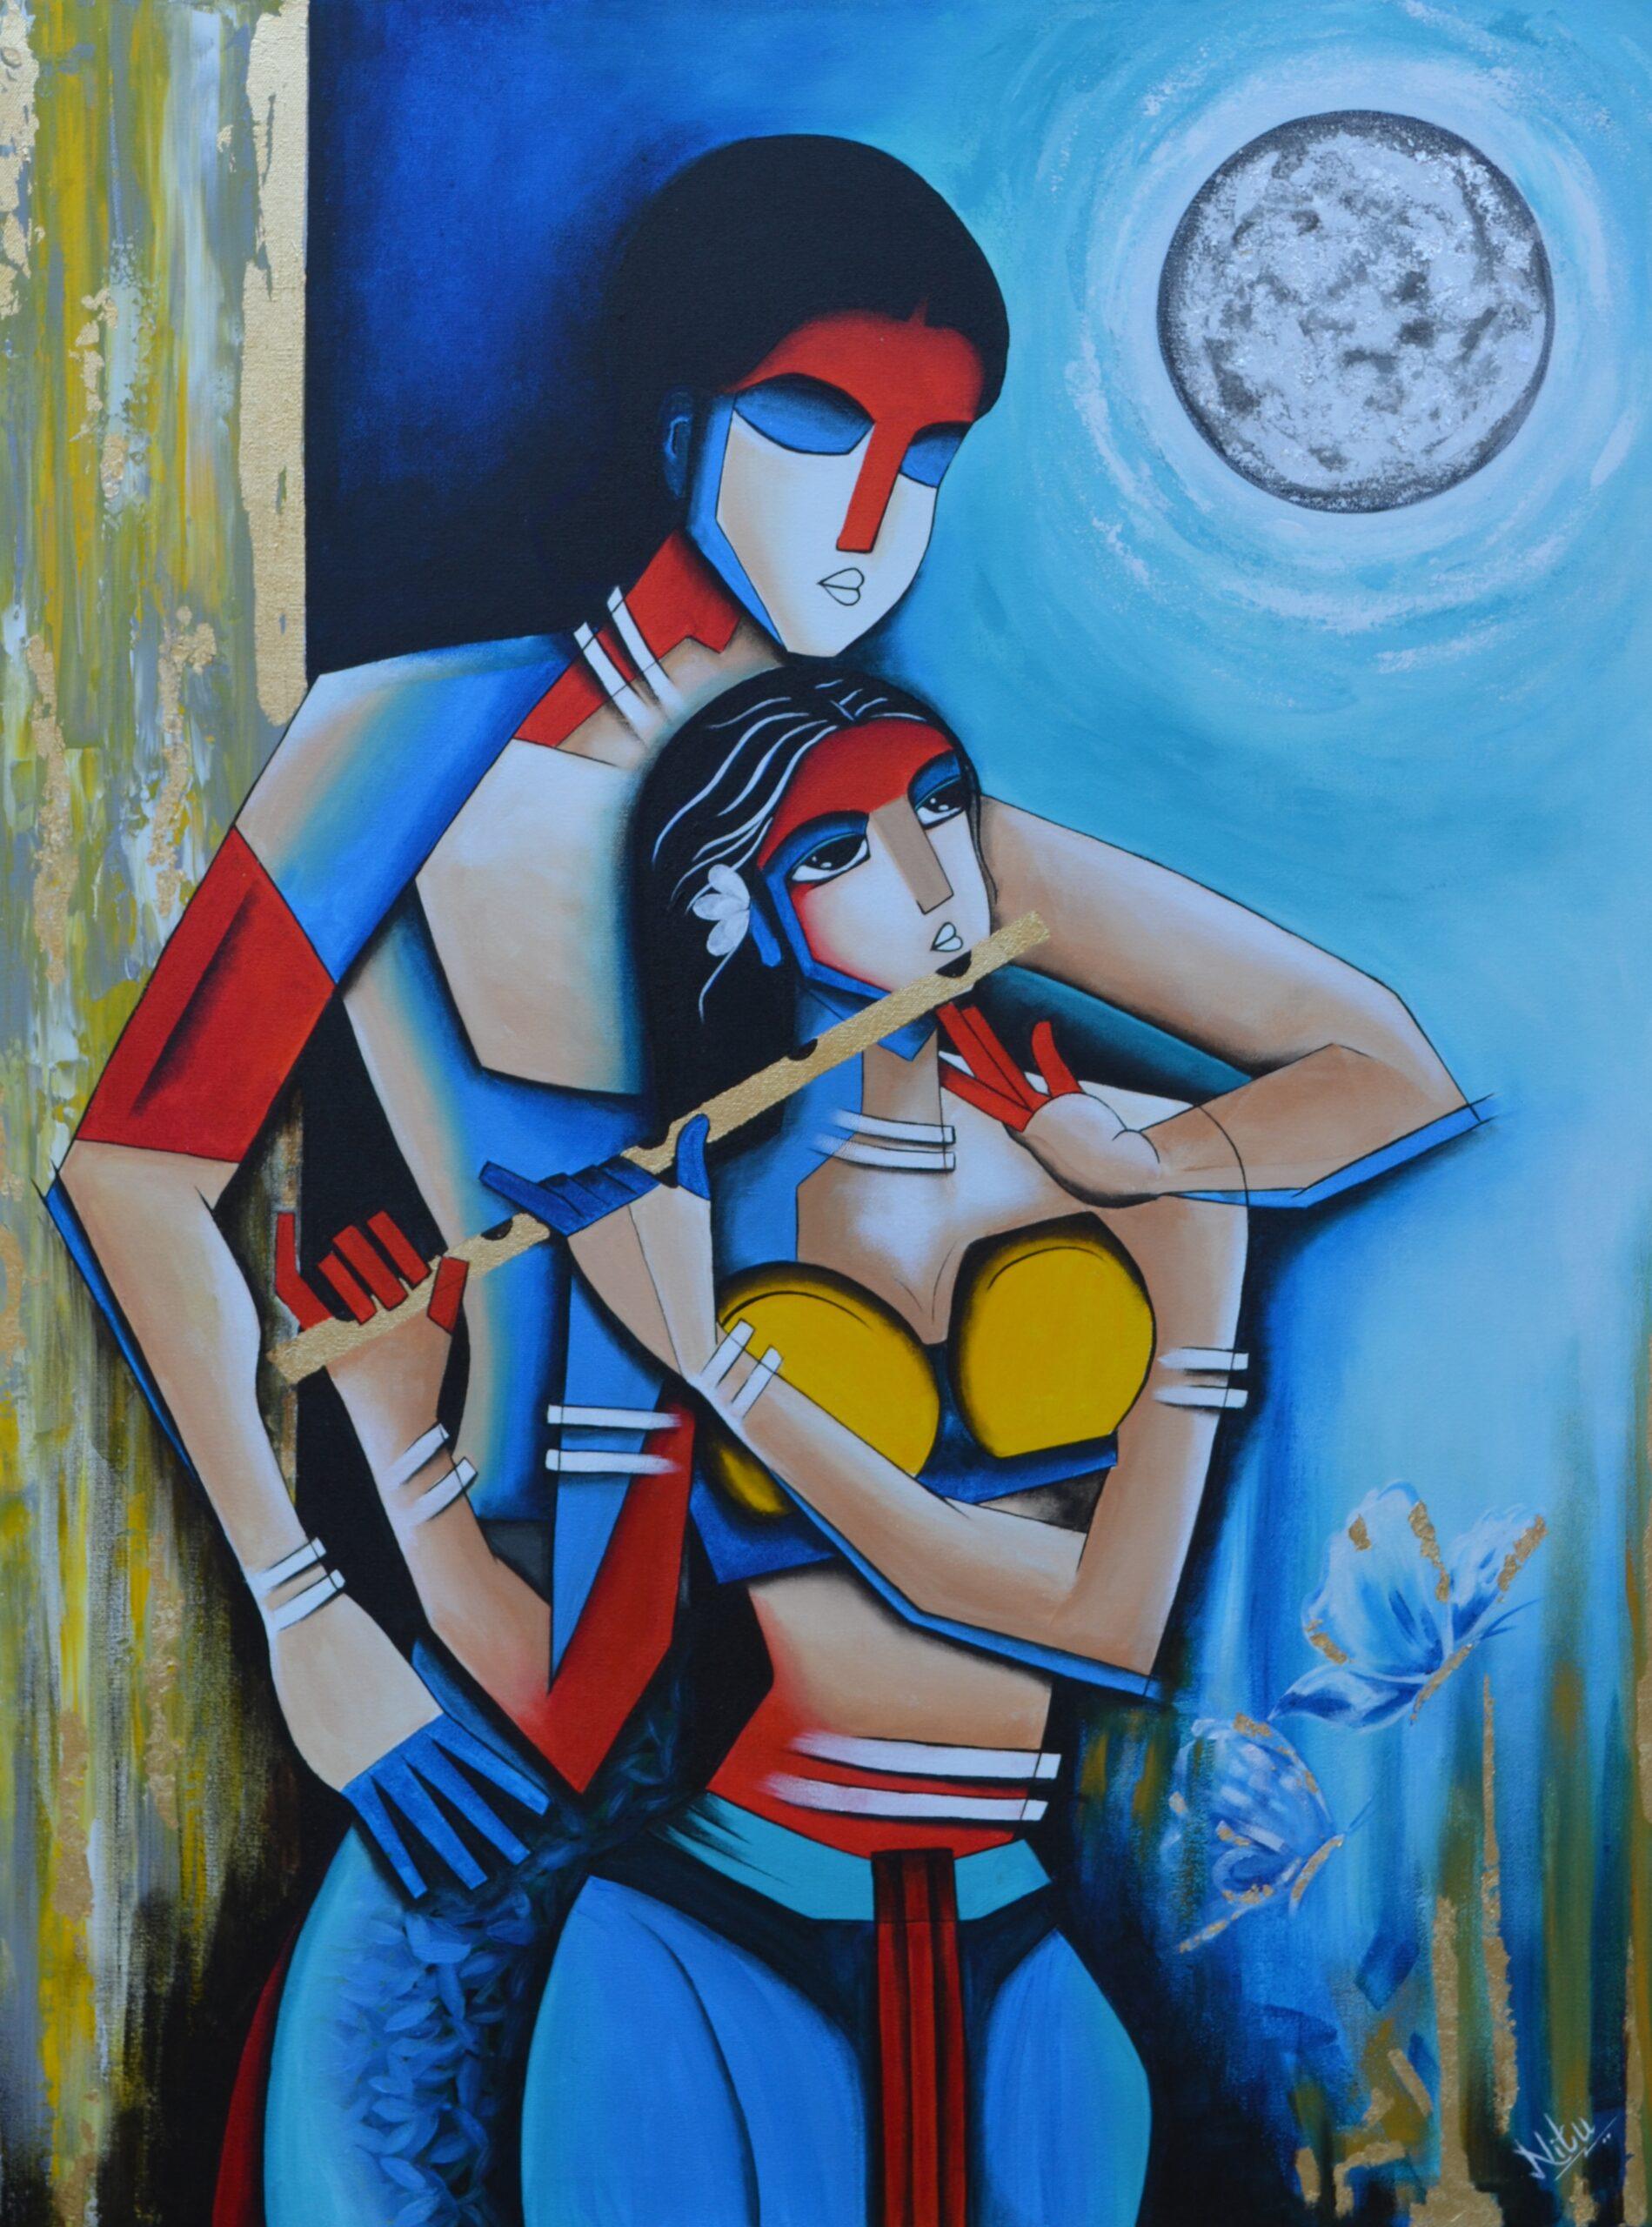 Transcendent love - Painting by Nitu Pilania